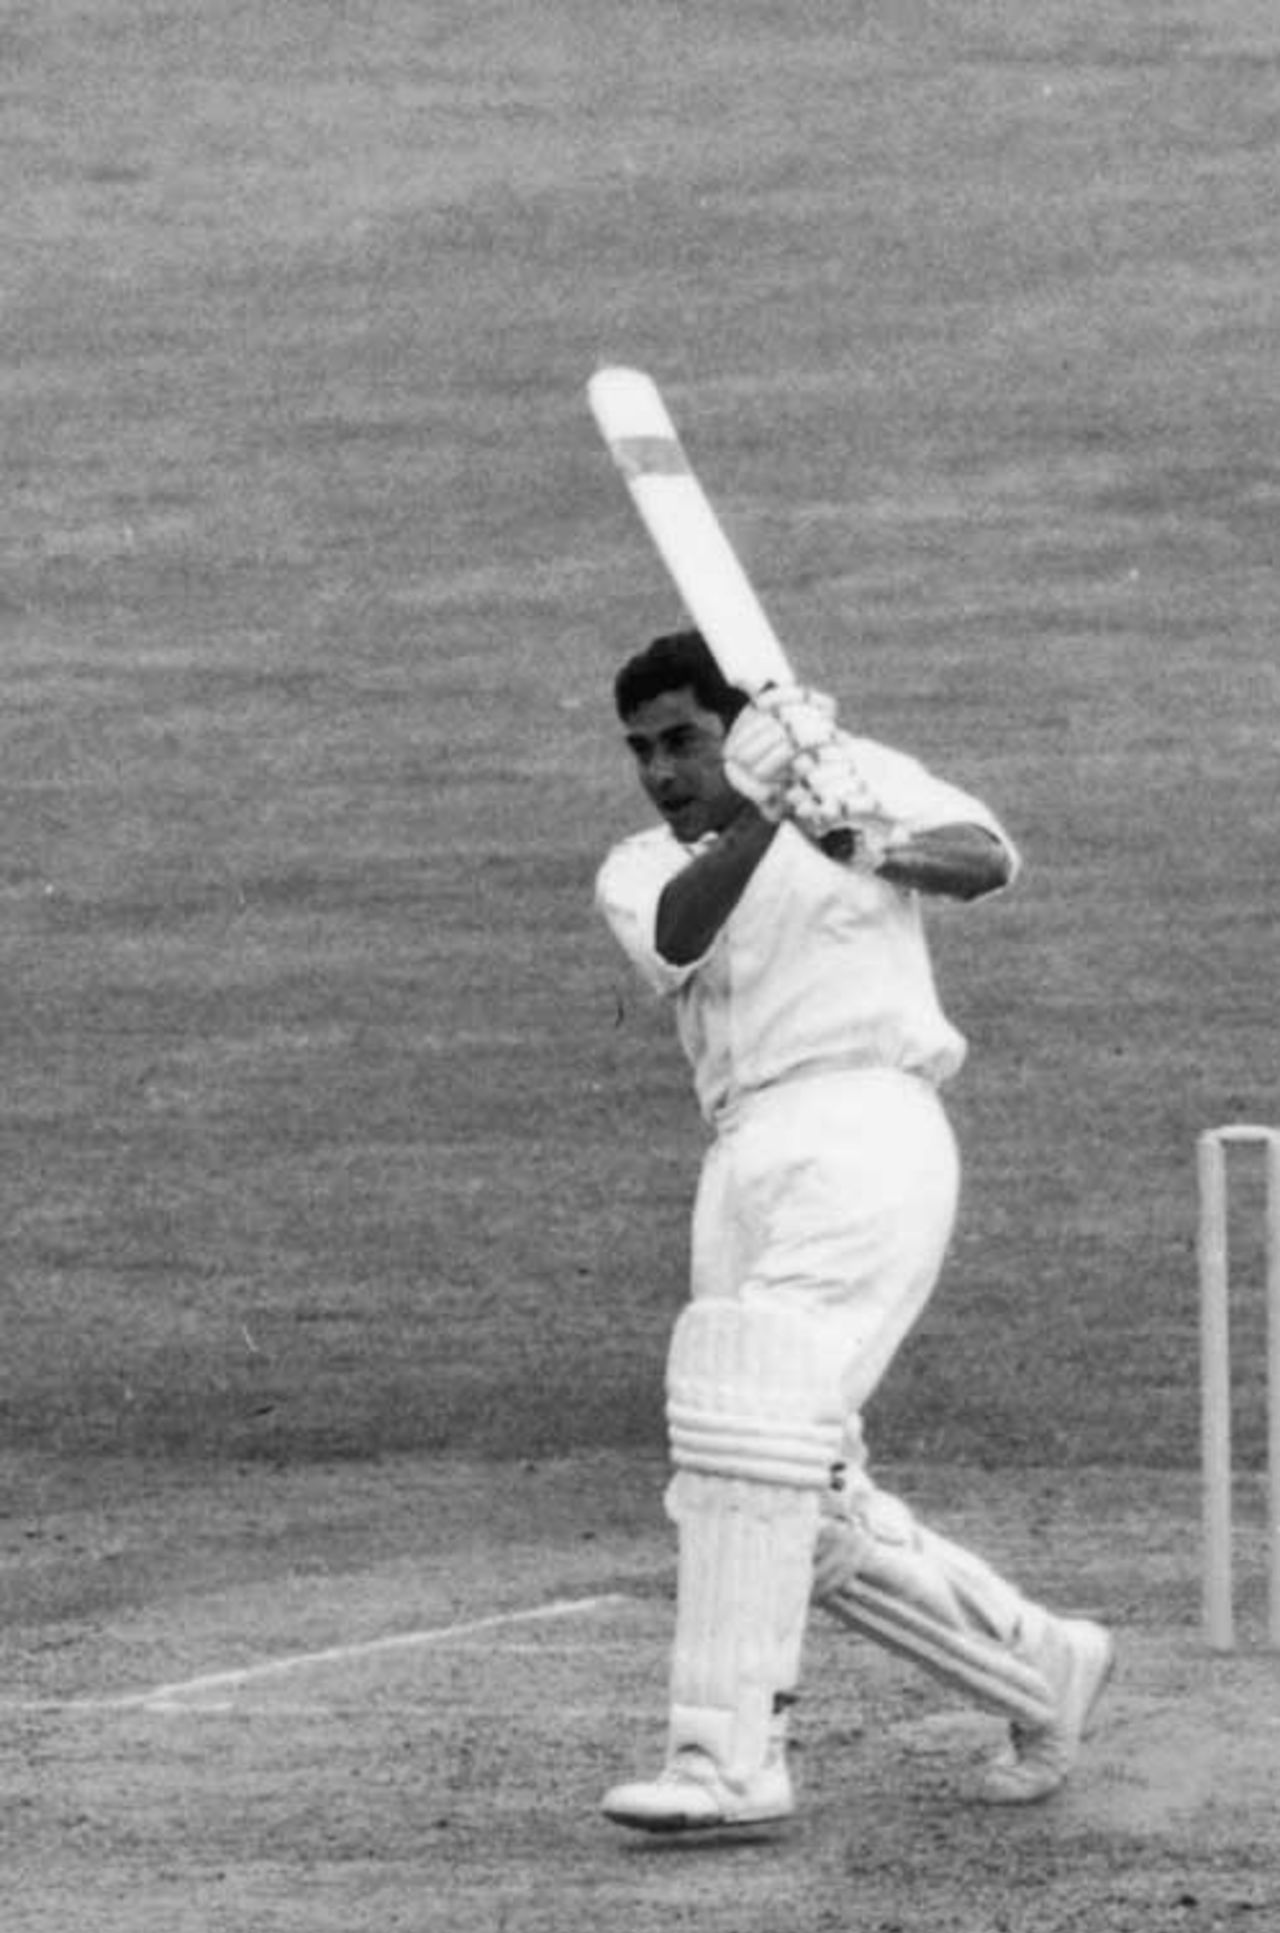 Farokh Engineer bats, England v India, third Test, The Oval, 1971

